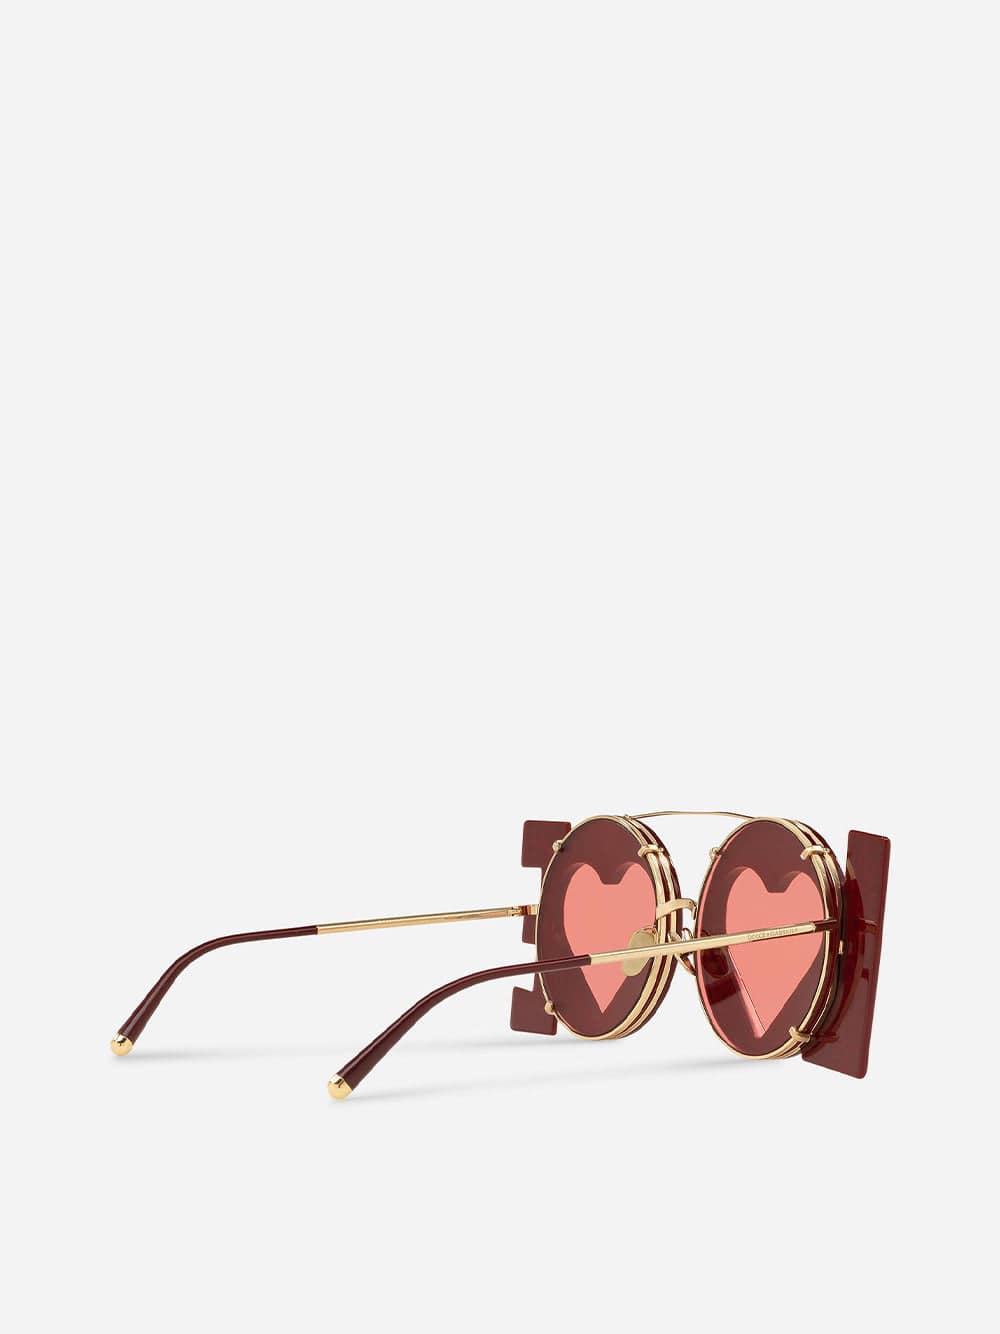 Dolce & Gabbana DG Love Sunglasses